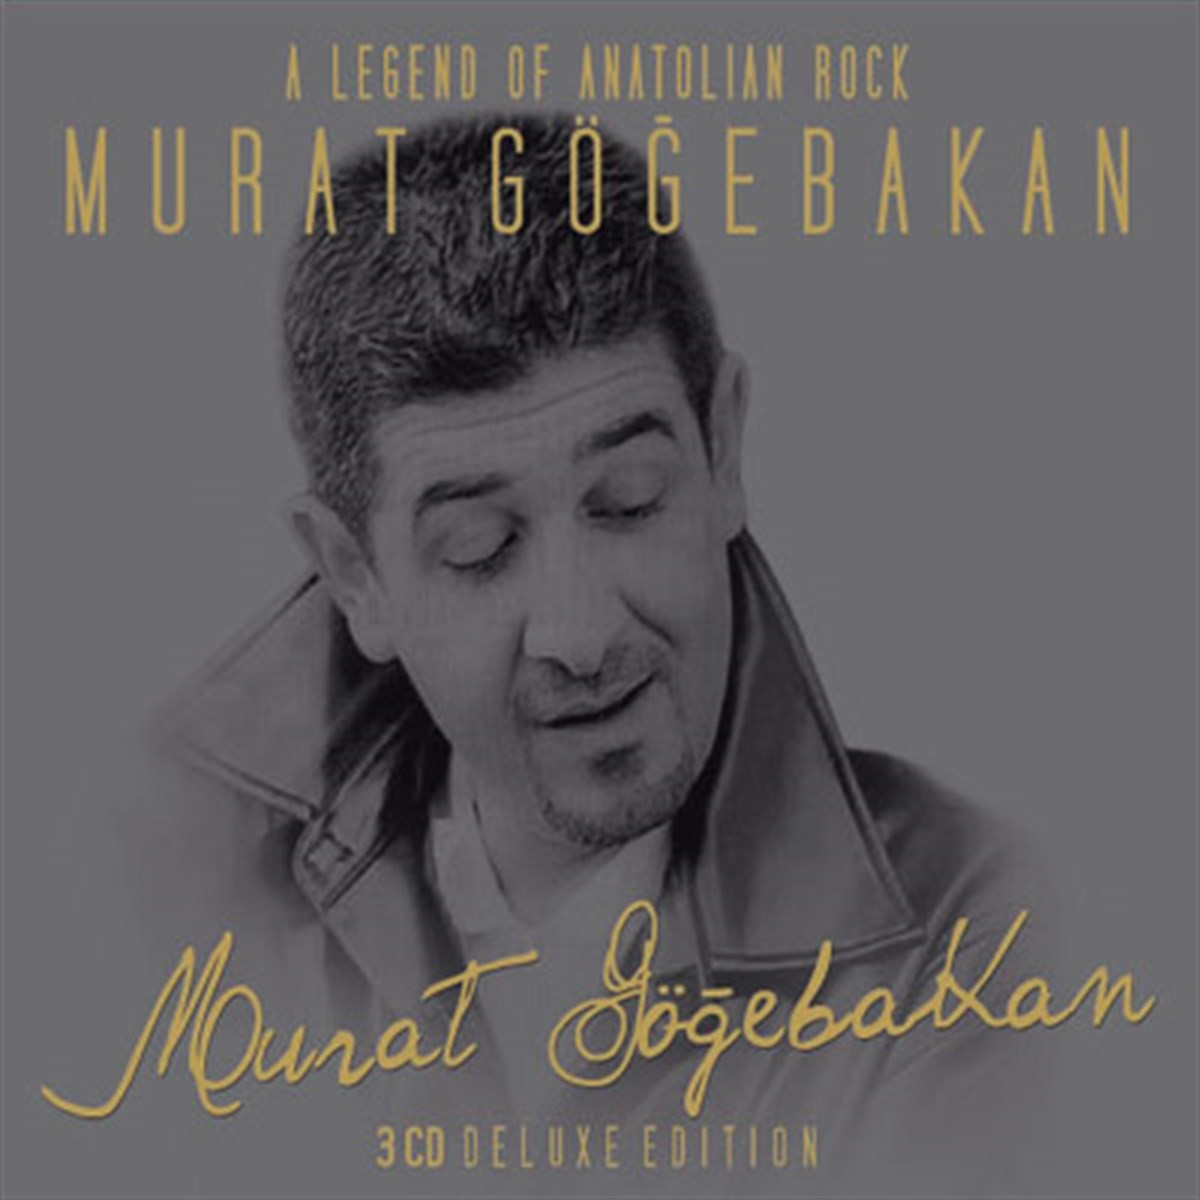 Murat göğebakan биография. Murat Göğebakan билгоафия. Певец Murat Gogebakan. Vurgunum от Murat Göğebakan.